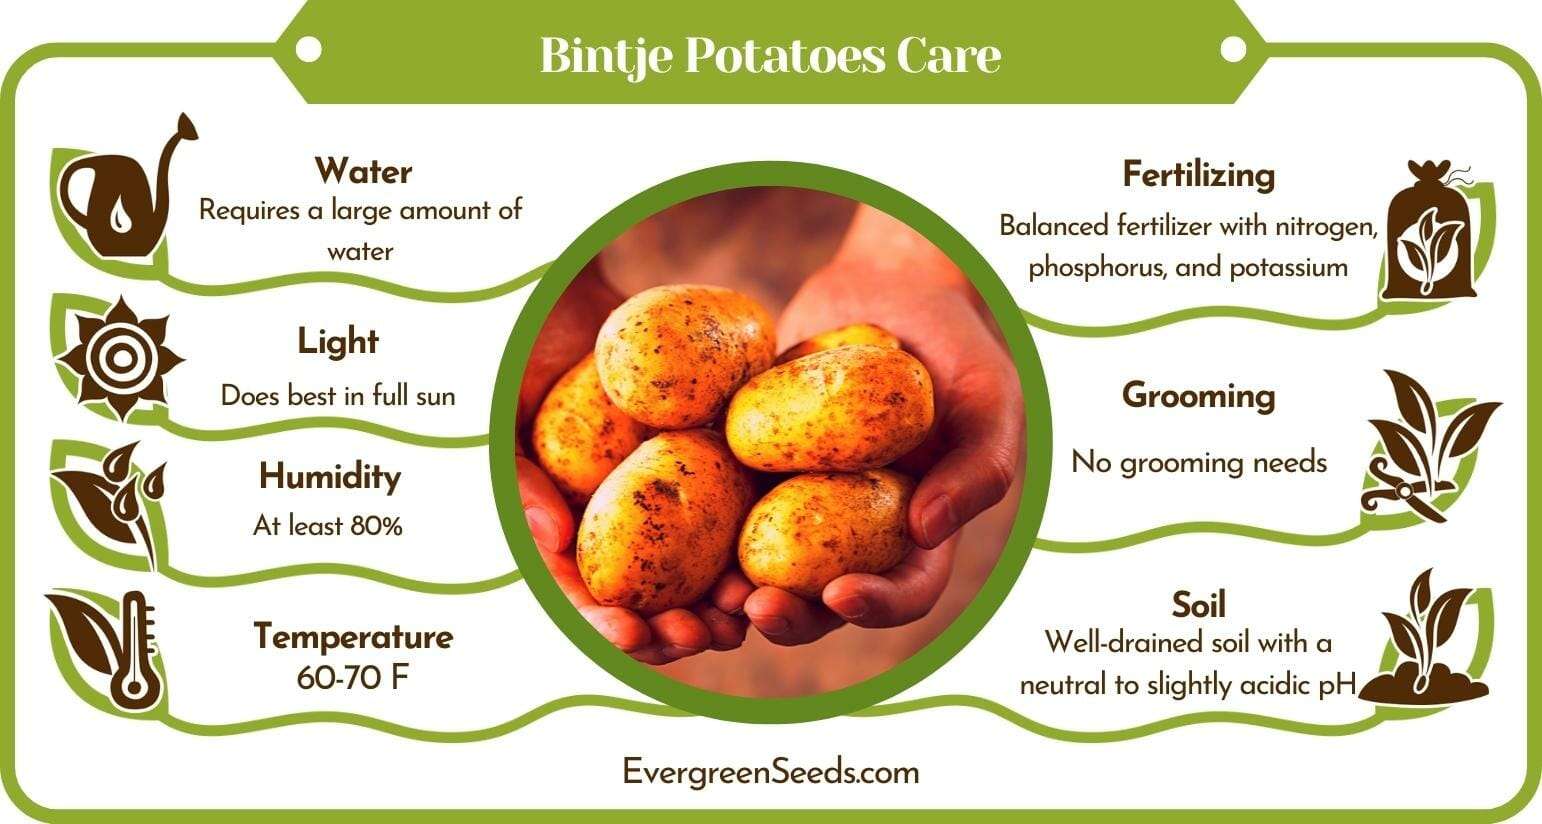 Bintje Potatoes Care Infographic